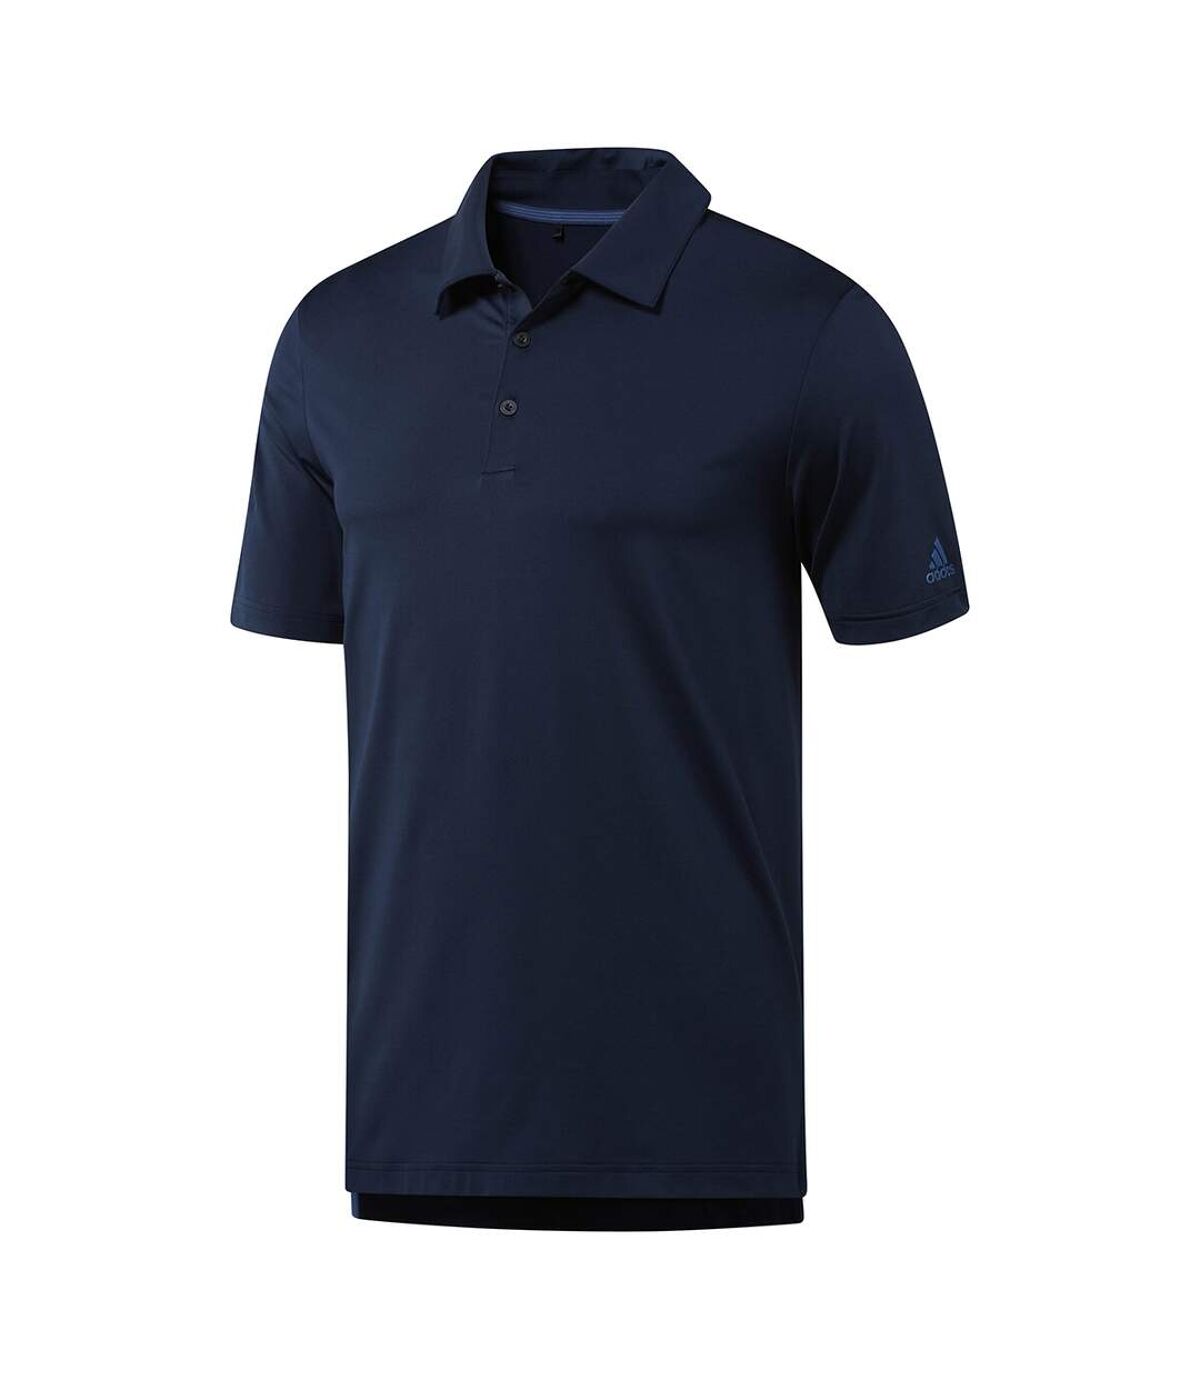 Adidas - Polo ULTIMATE 365 - Homme (Bleu fonce) - UTRW6135